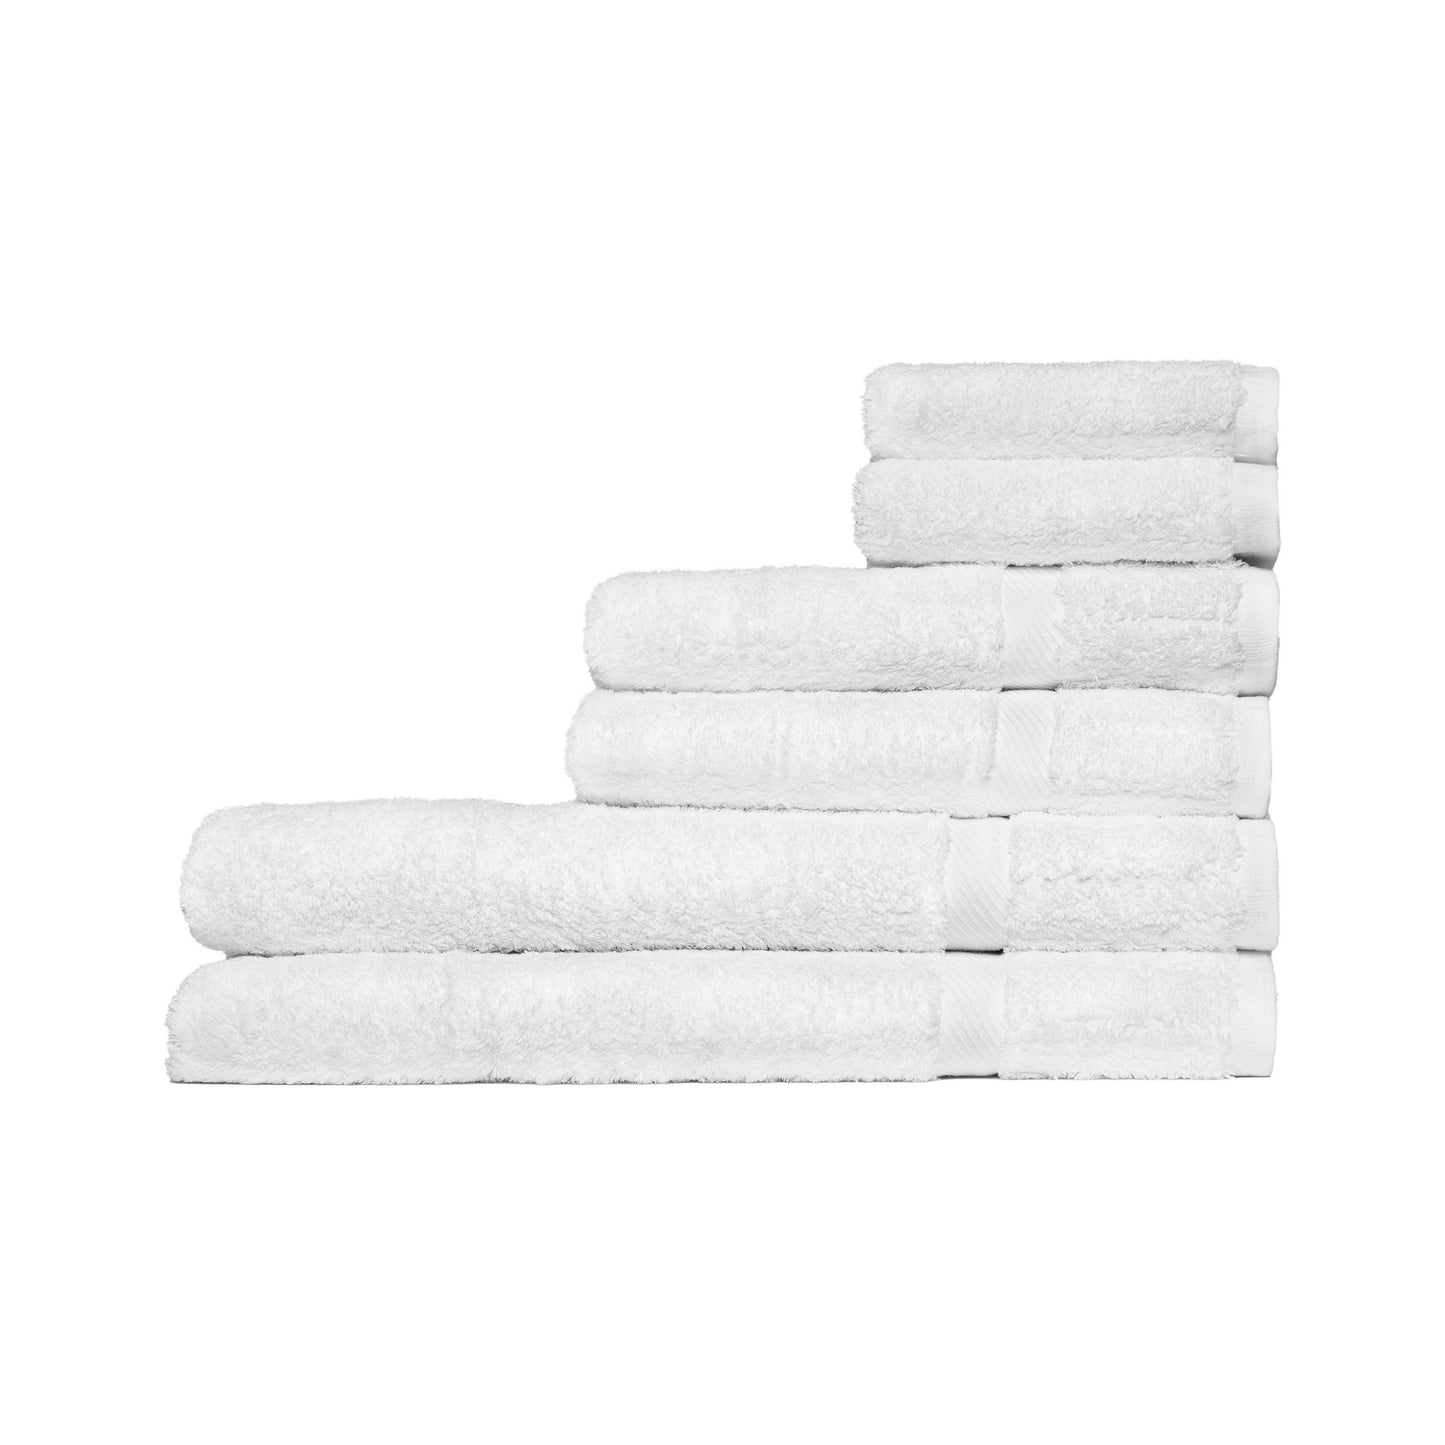 Luxury 100% Cotton Bath Towels - 6 Piece Set, Extra Soft & Fluffy